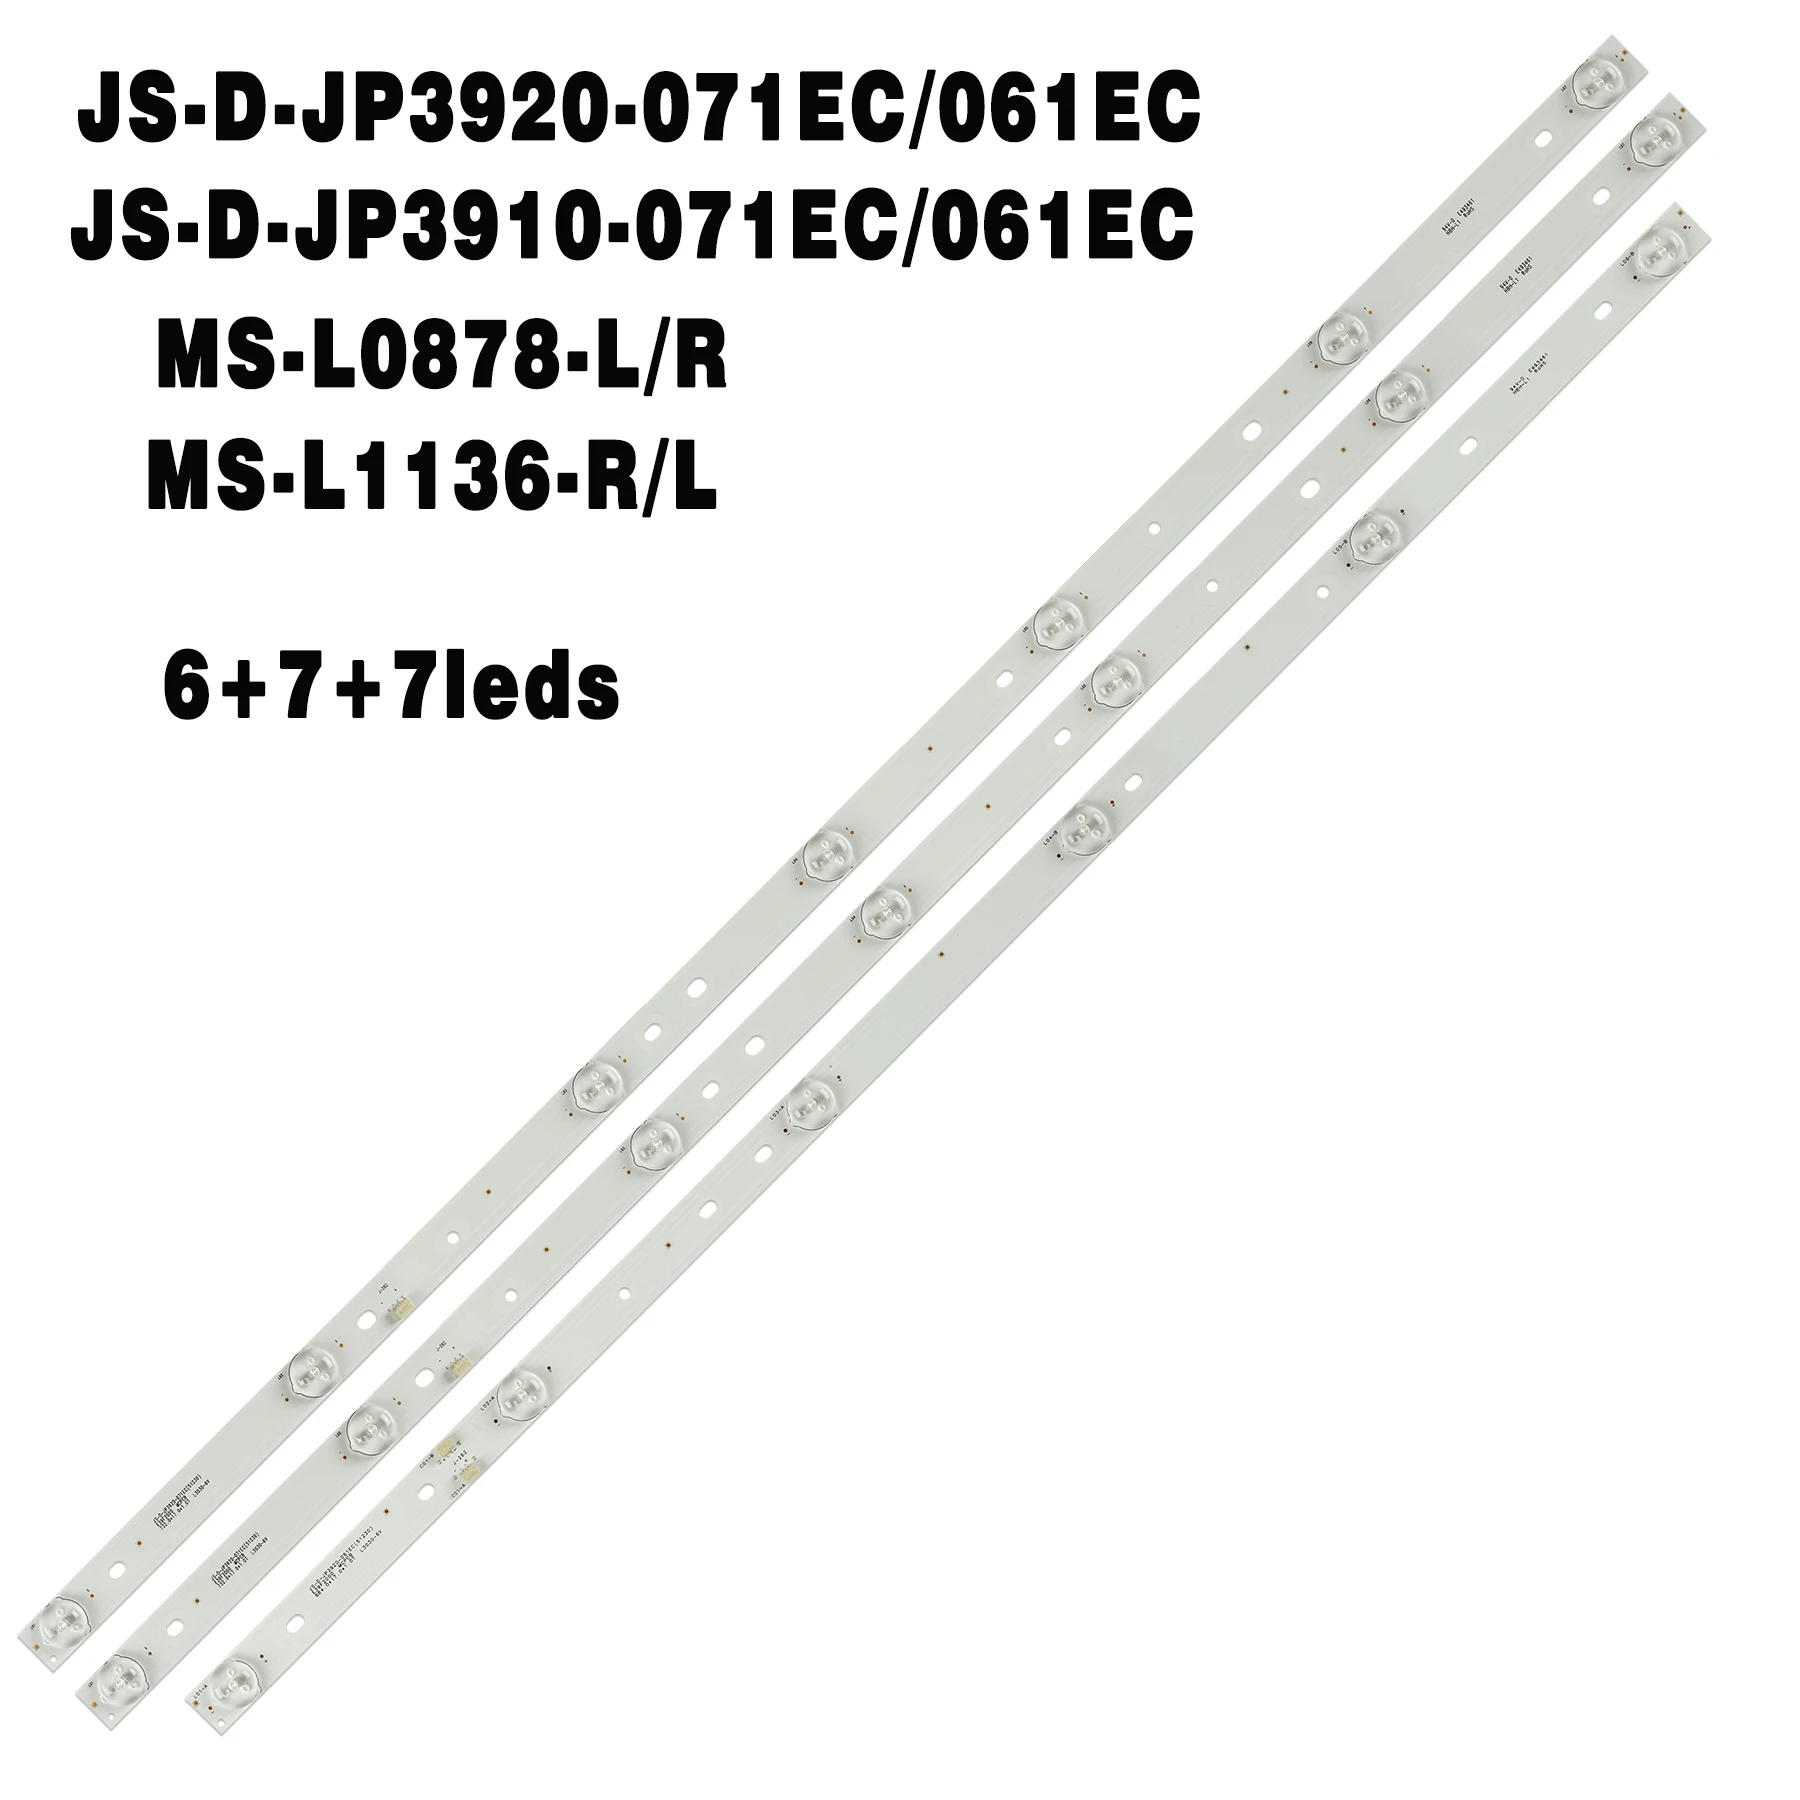 30pcs led backlight led strip MS-L0878-L/R V7 V6 E365061 MS-L1136-R/L AKAI AKTV401 AKTV403 AKTV4021 AKTV408 JS-D-JP3910-071EC